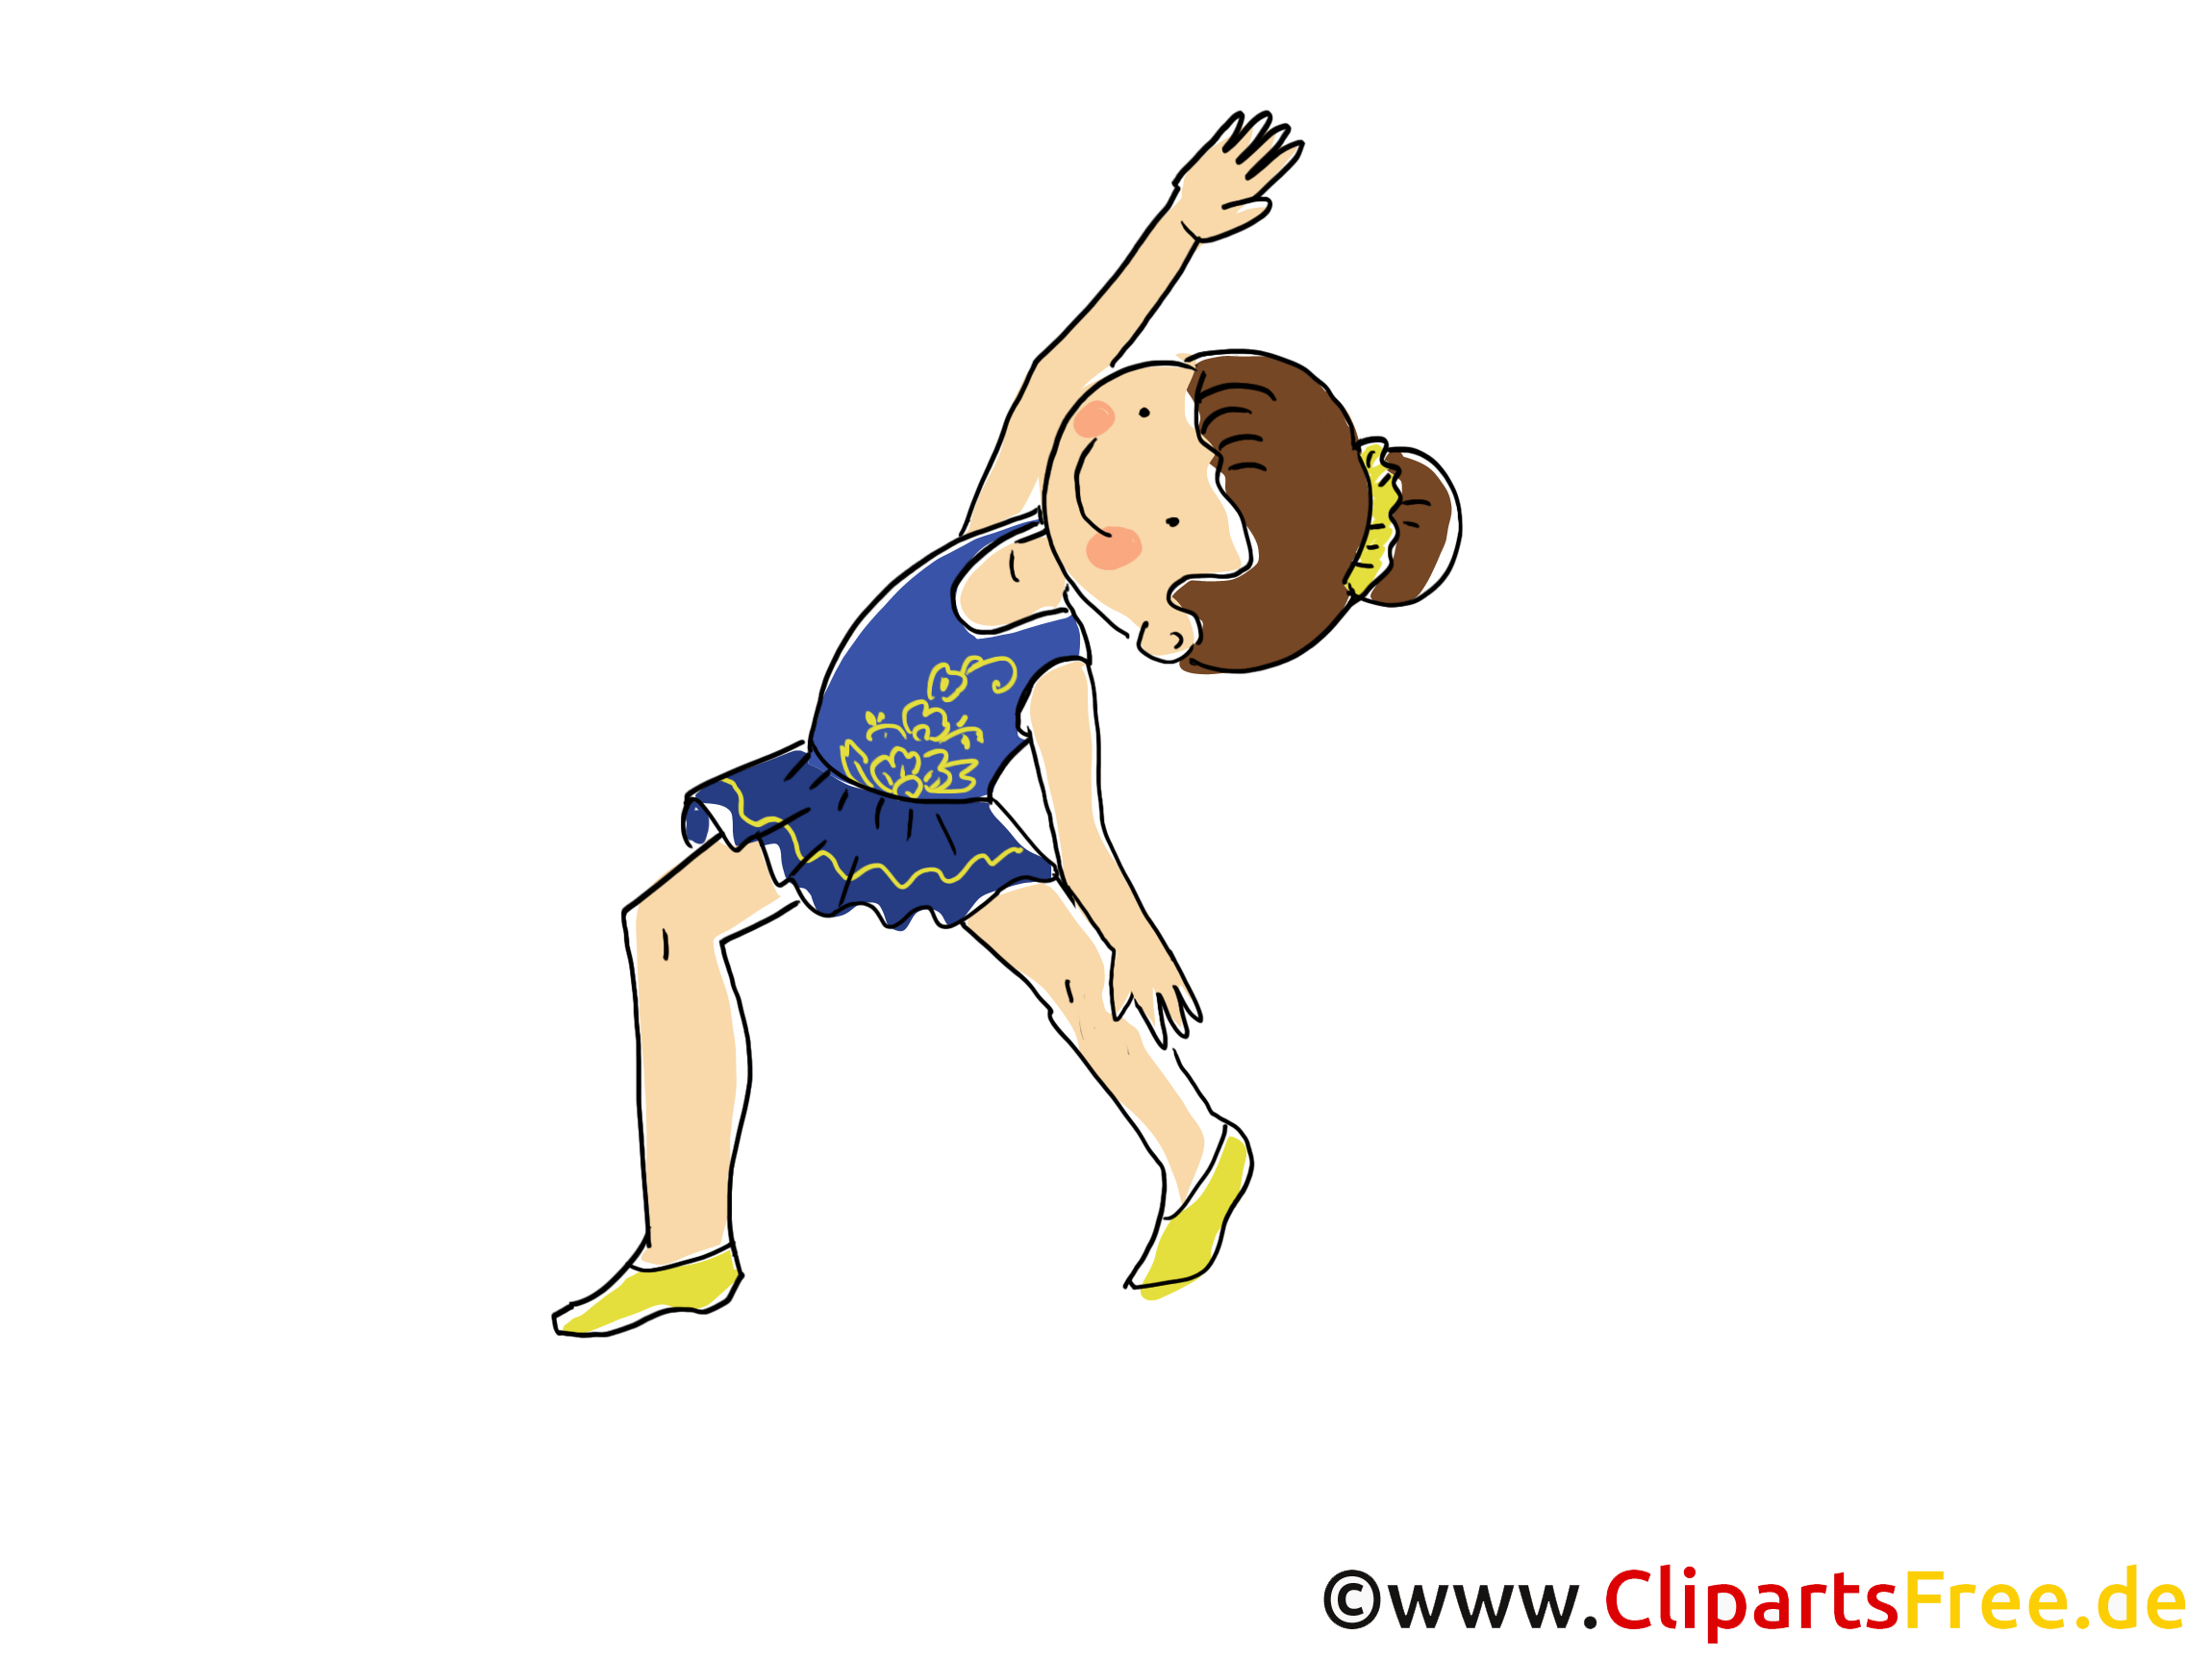 clipart sport gymnastik - photo #25